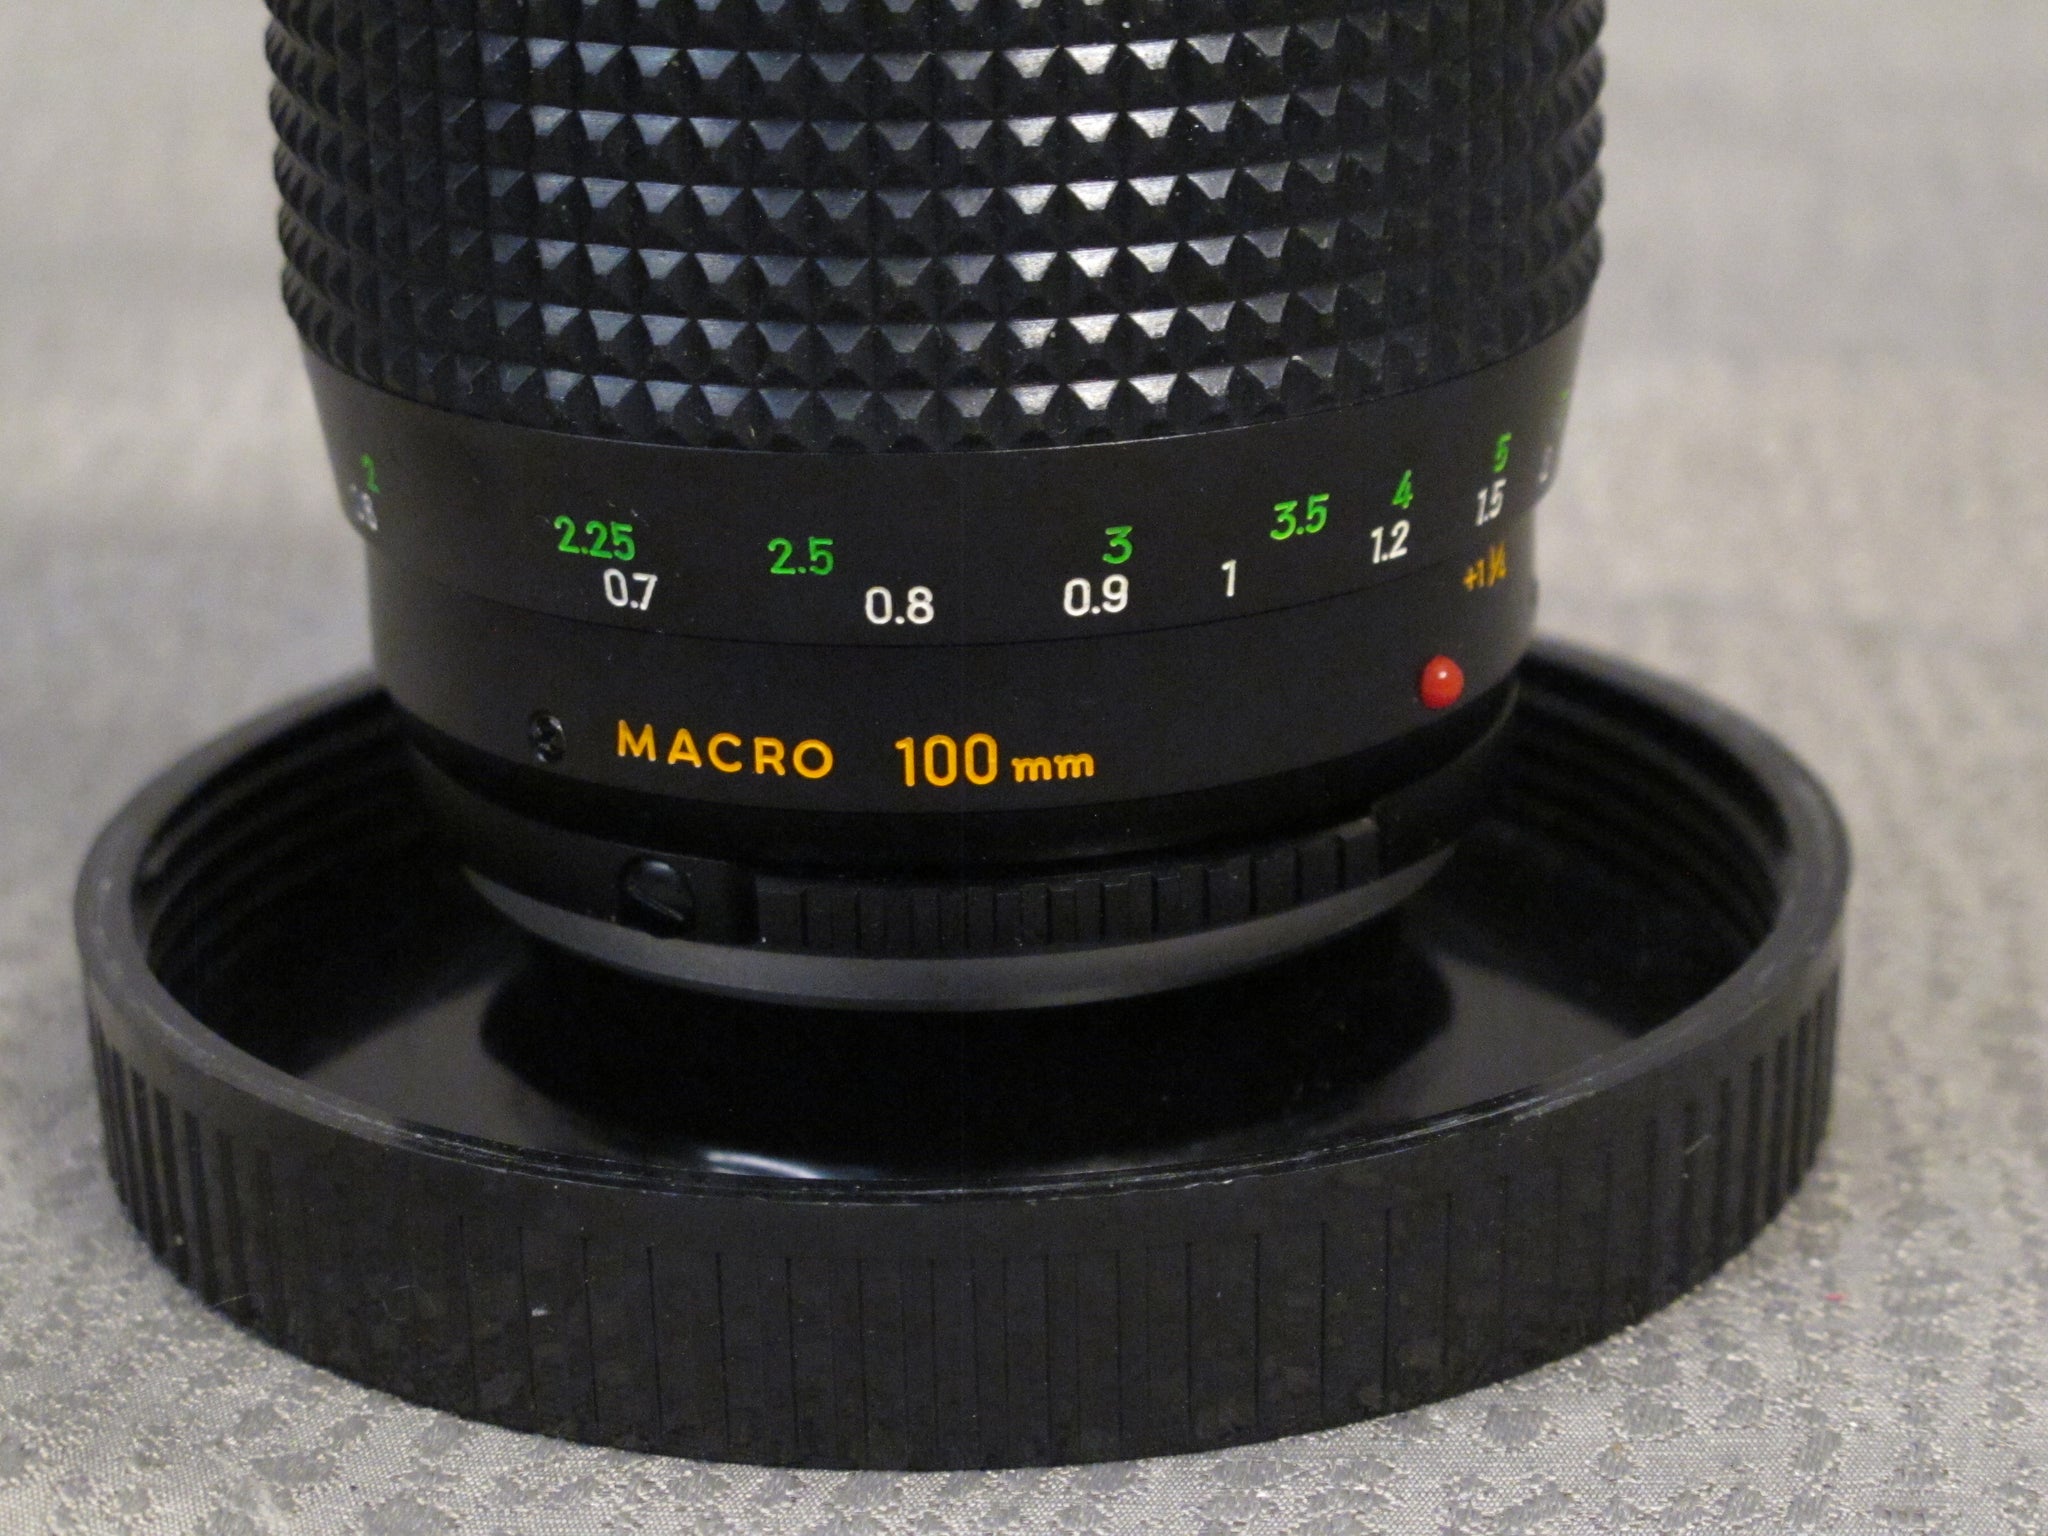 Minolta MC MACRO ROKKOR-X 100mm f3.5 Lens with Life-Size Adapter